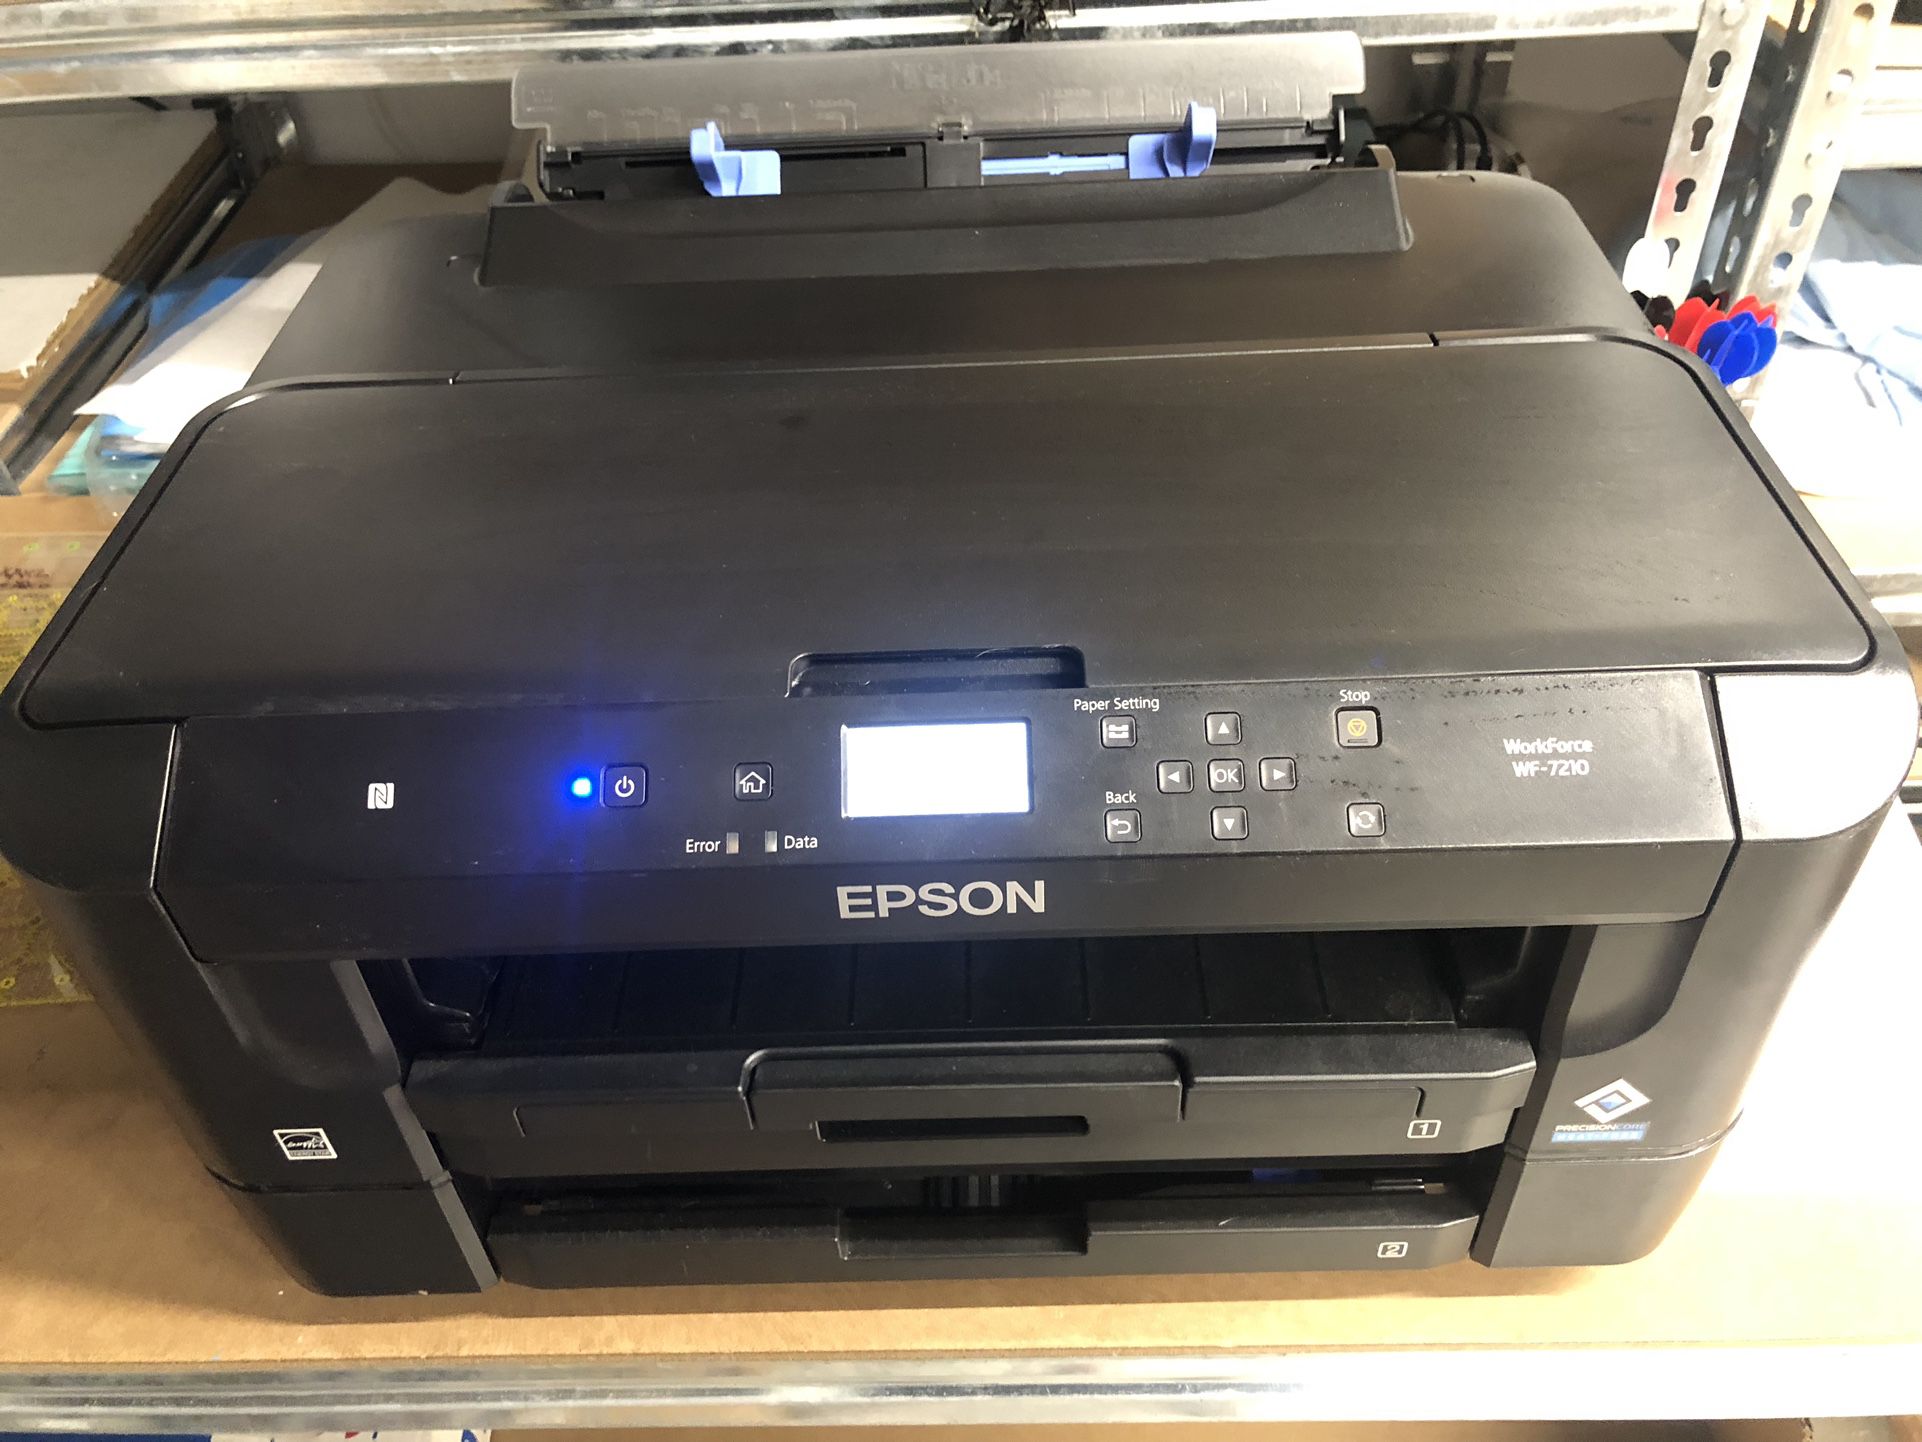 Epson WorkForce WF-7210 Inkjet Photo Printer  - (Good Condition)